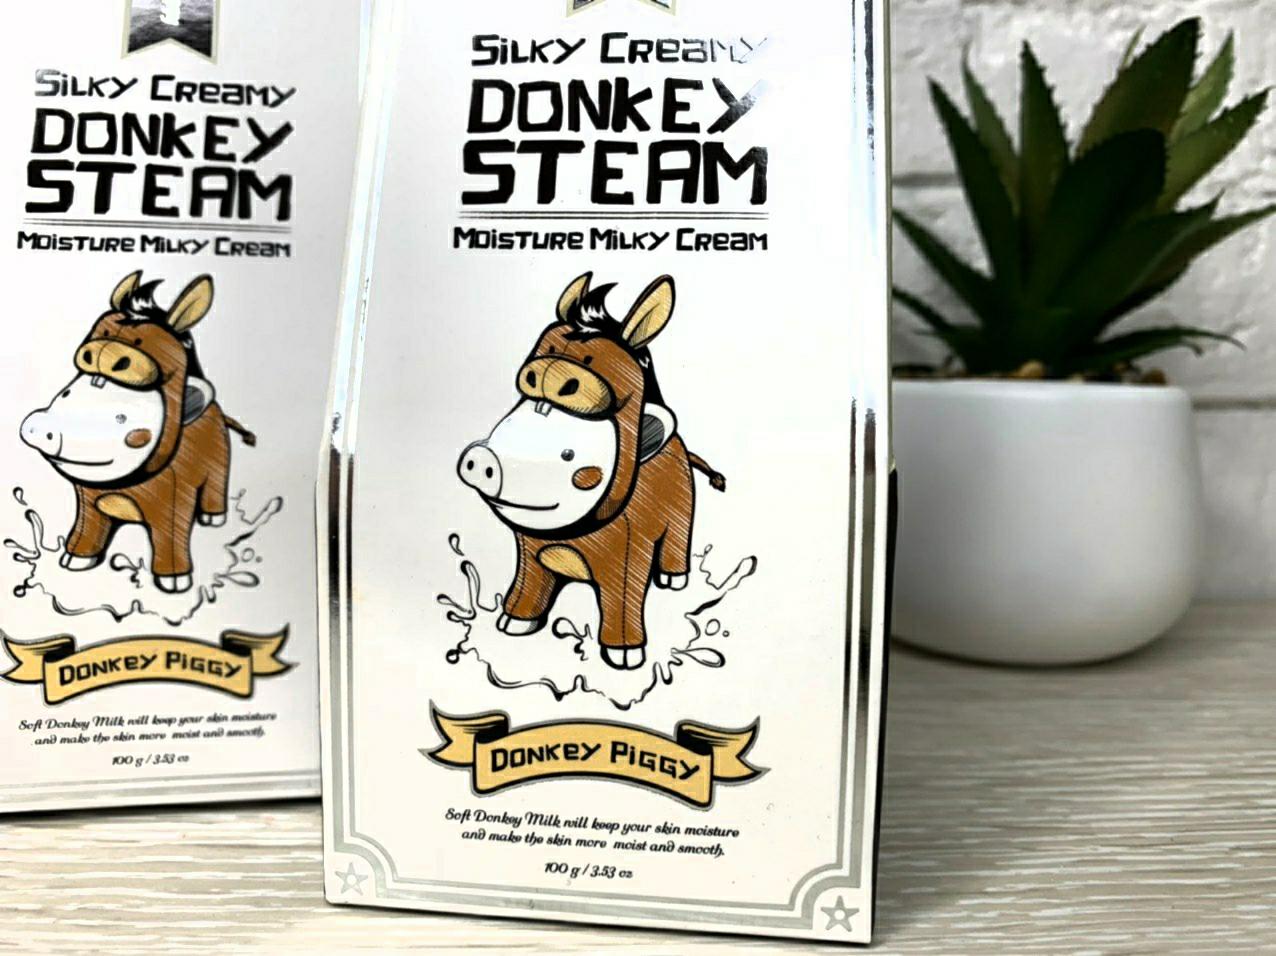 Donkey steam moisture milky фото 115